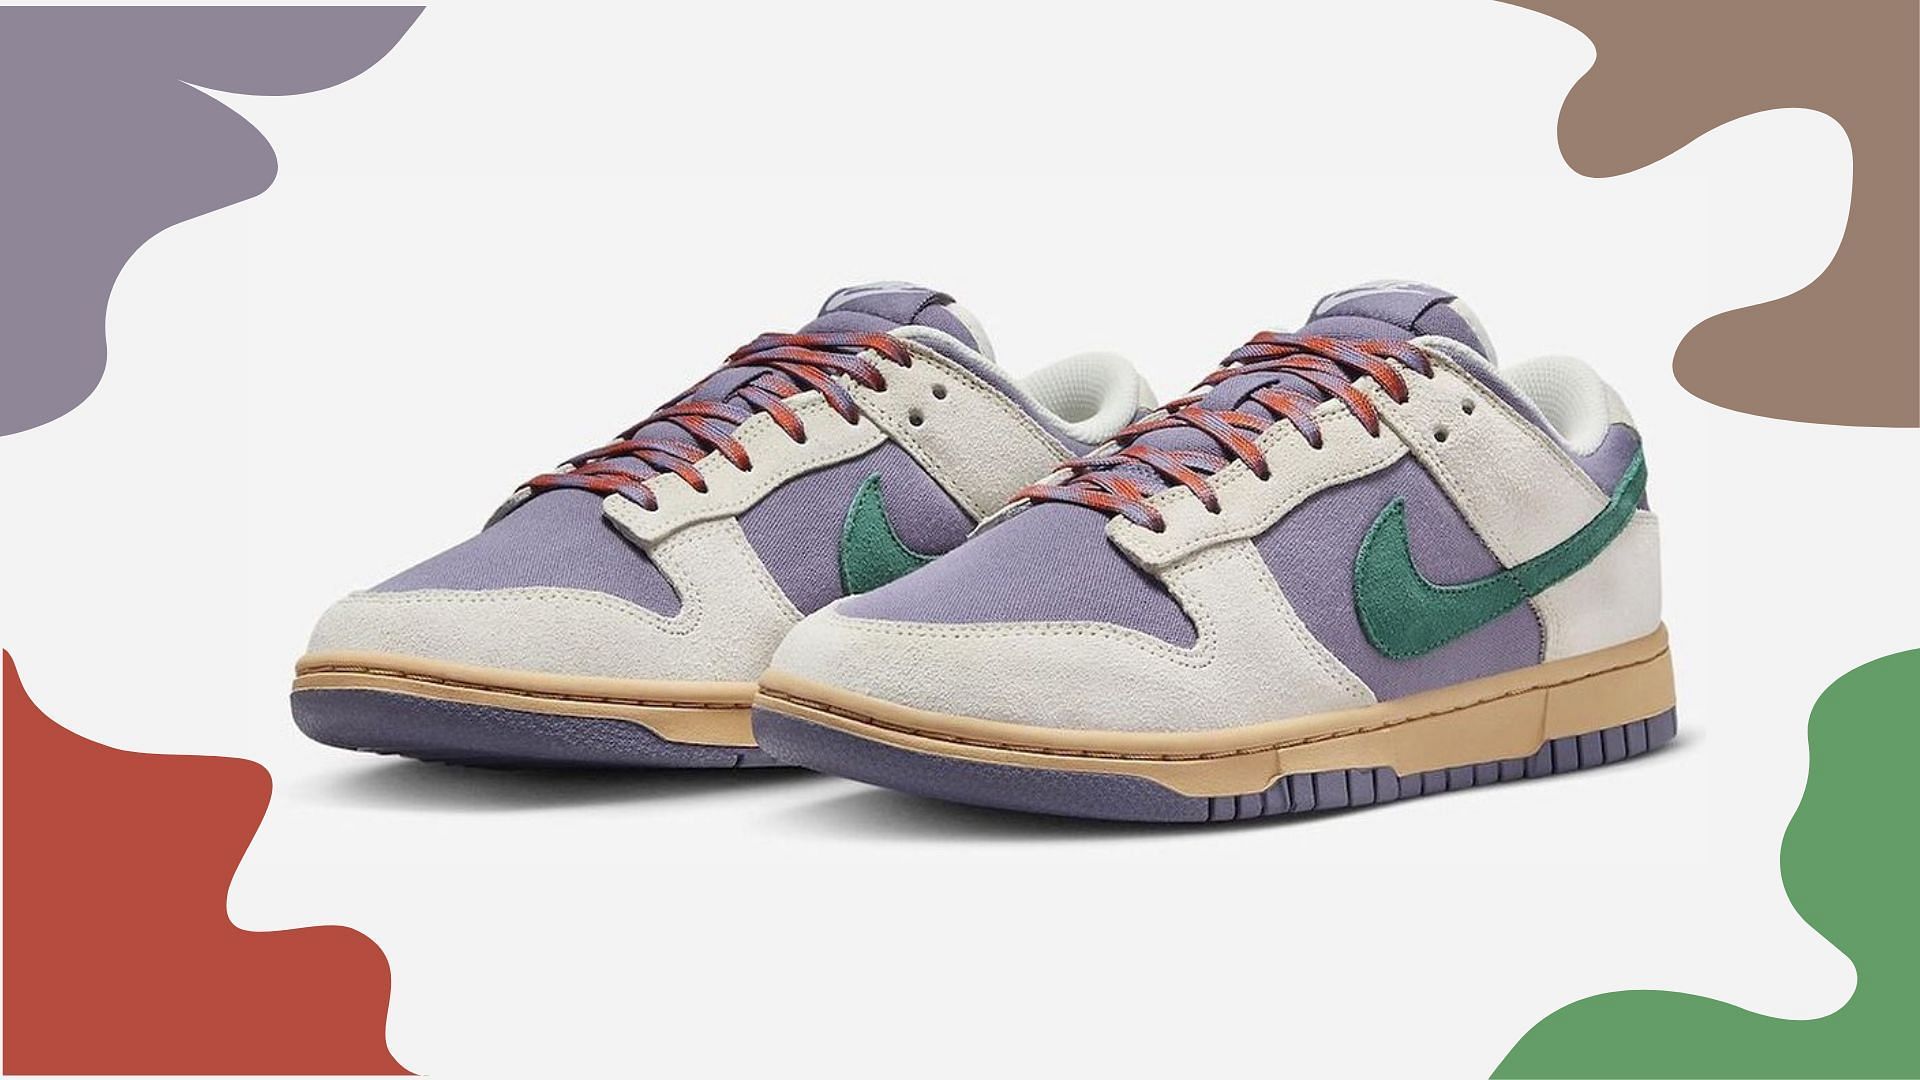 Nike Dunk Low Joker shoes (Image via YouTube/@inboxtogo)